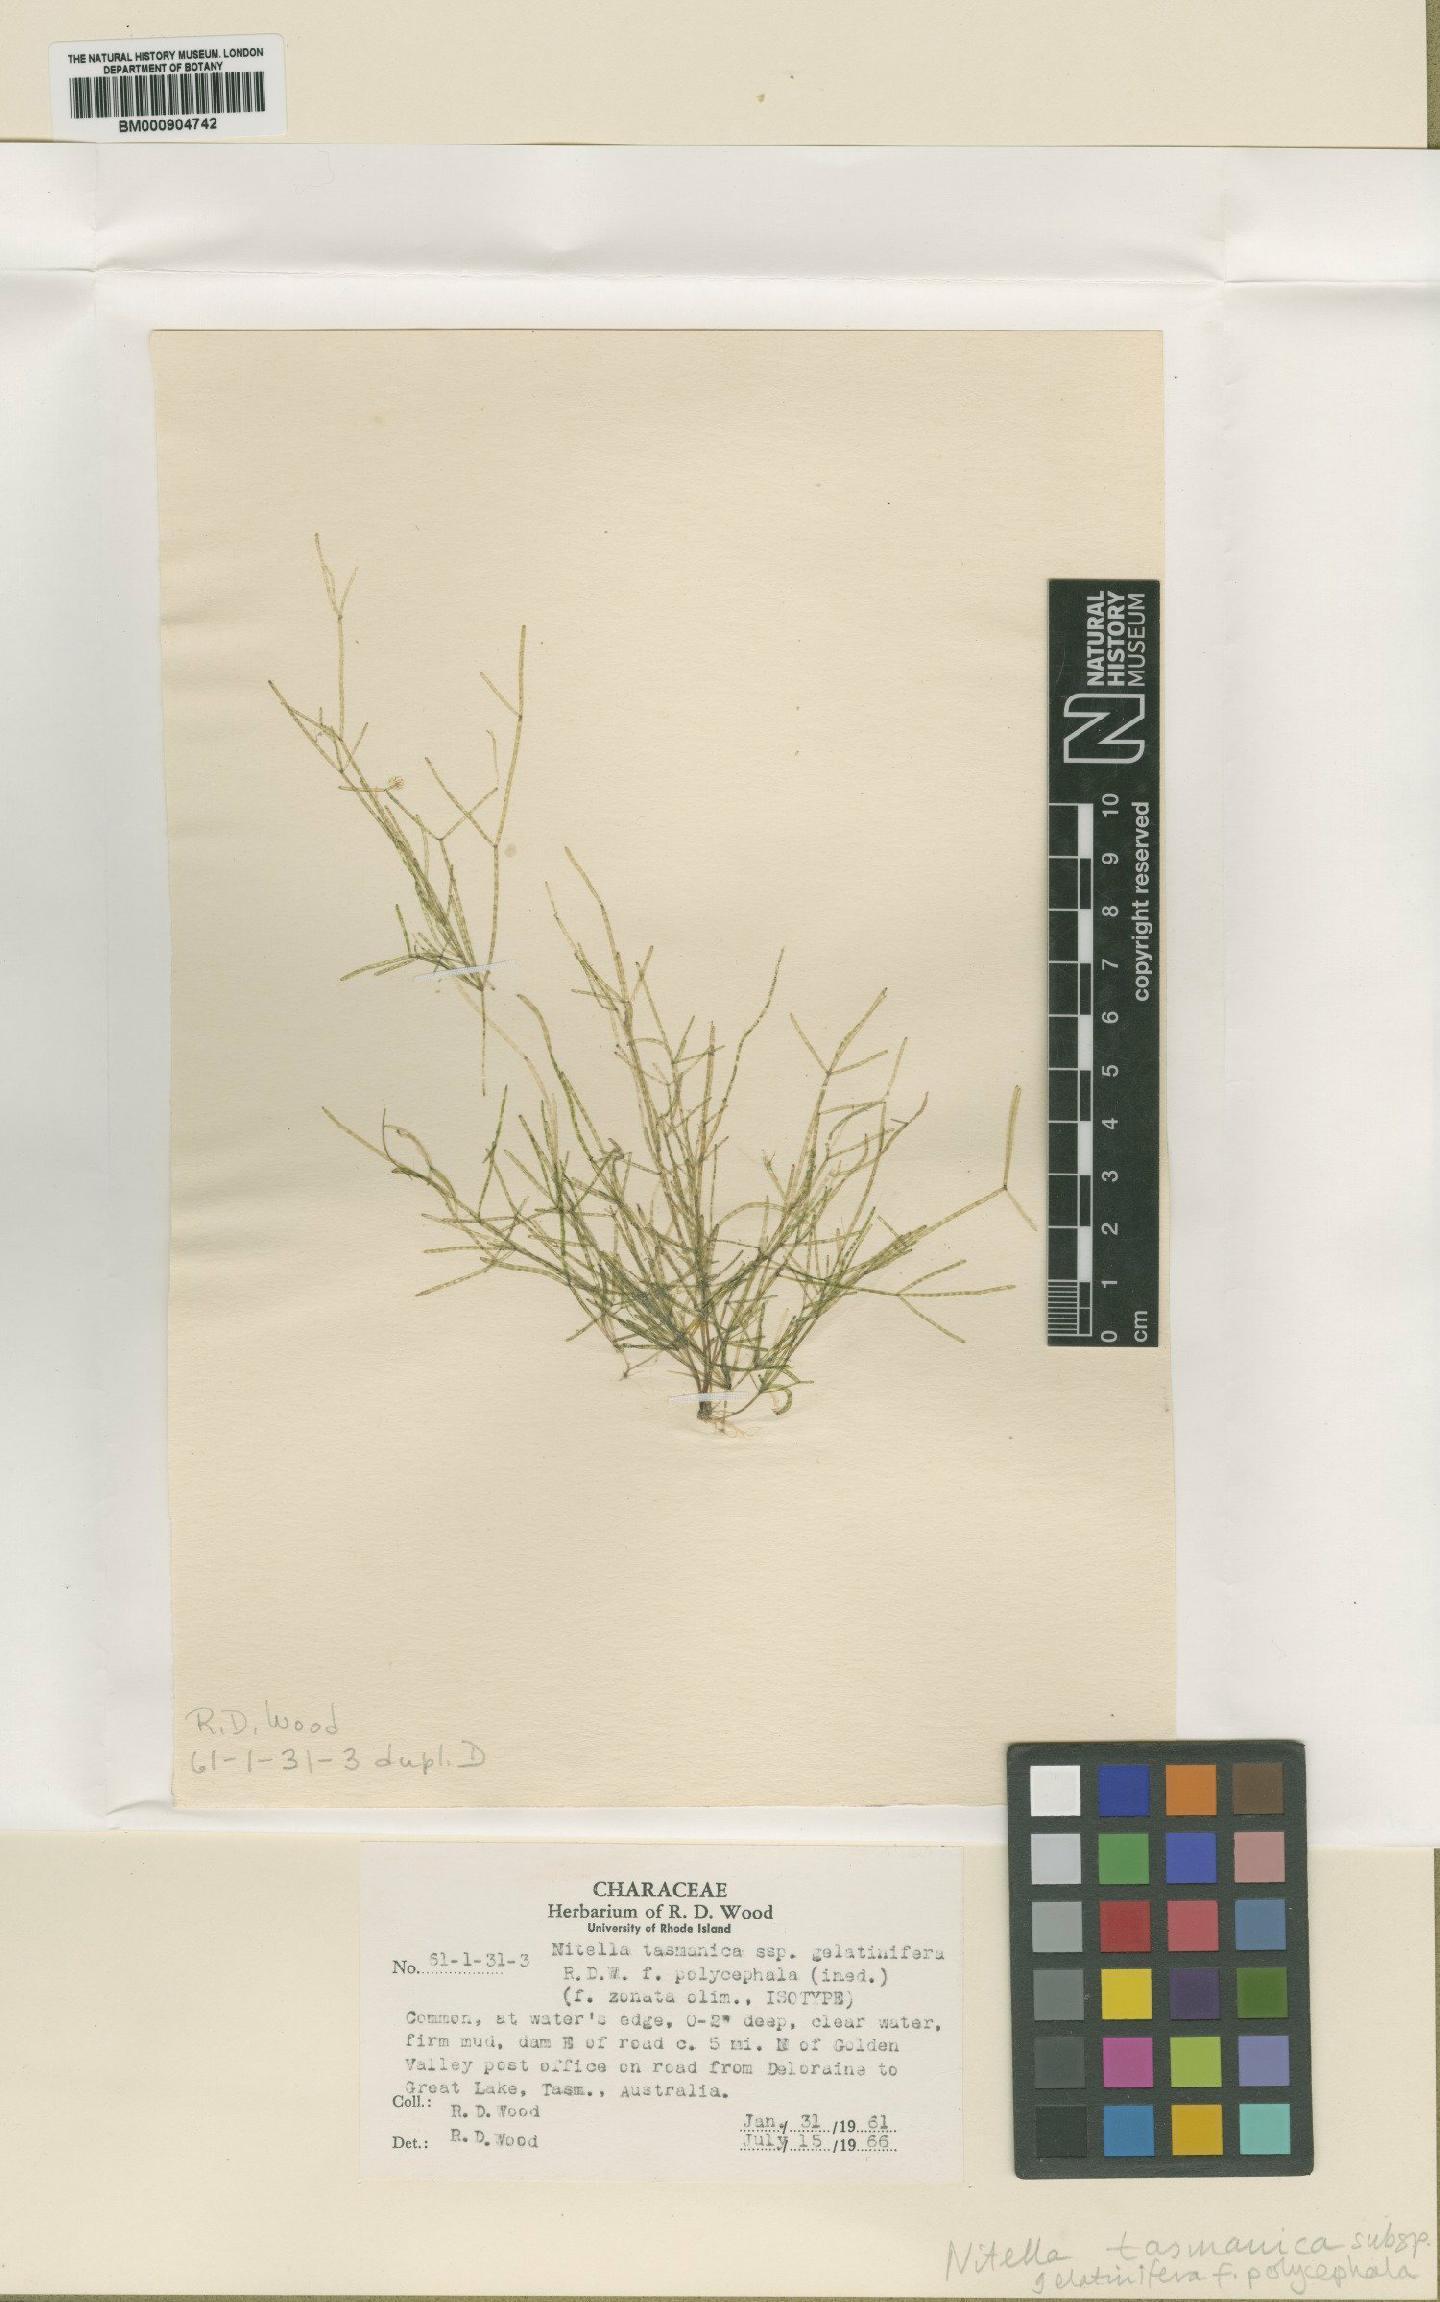 To NHMUK collection (Nitella gelatinifera (R.D.Wood) R.D.Wood; Isotype; NHMUK:ecatalogue:2795239)